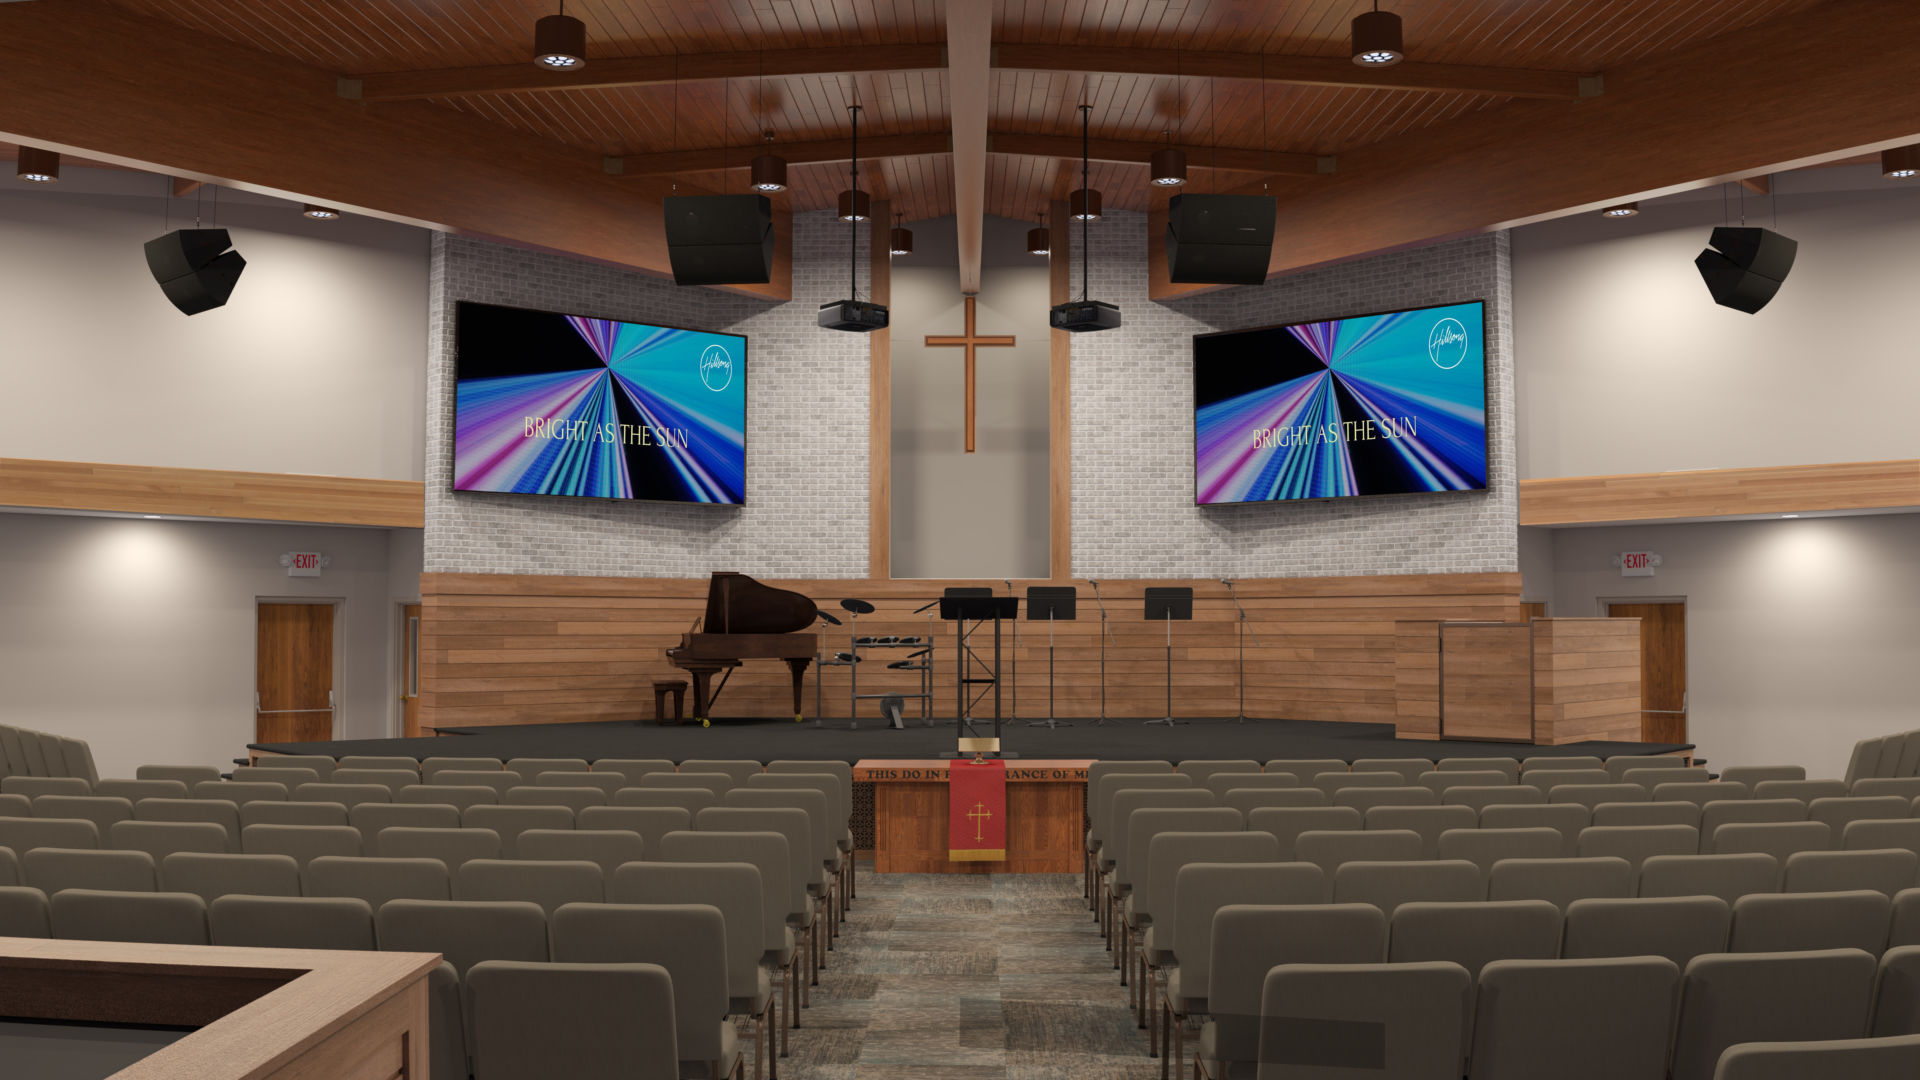 Church Decorating Services Liturgical Interior Design